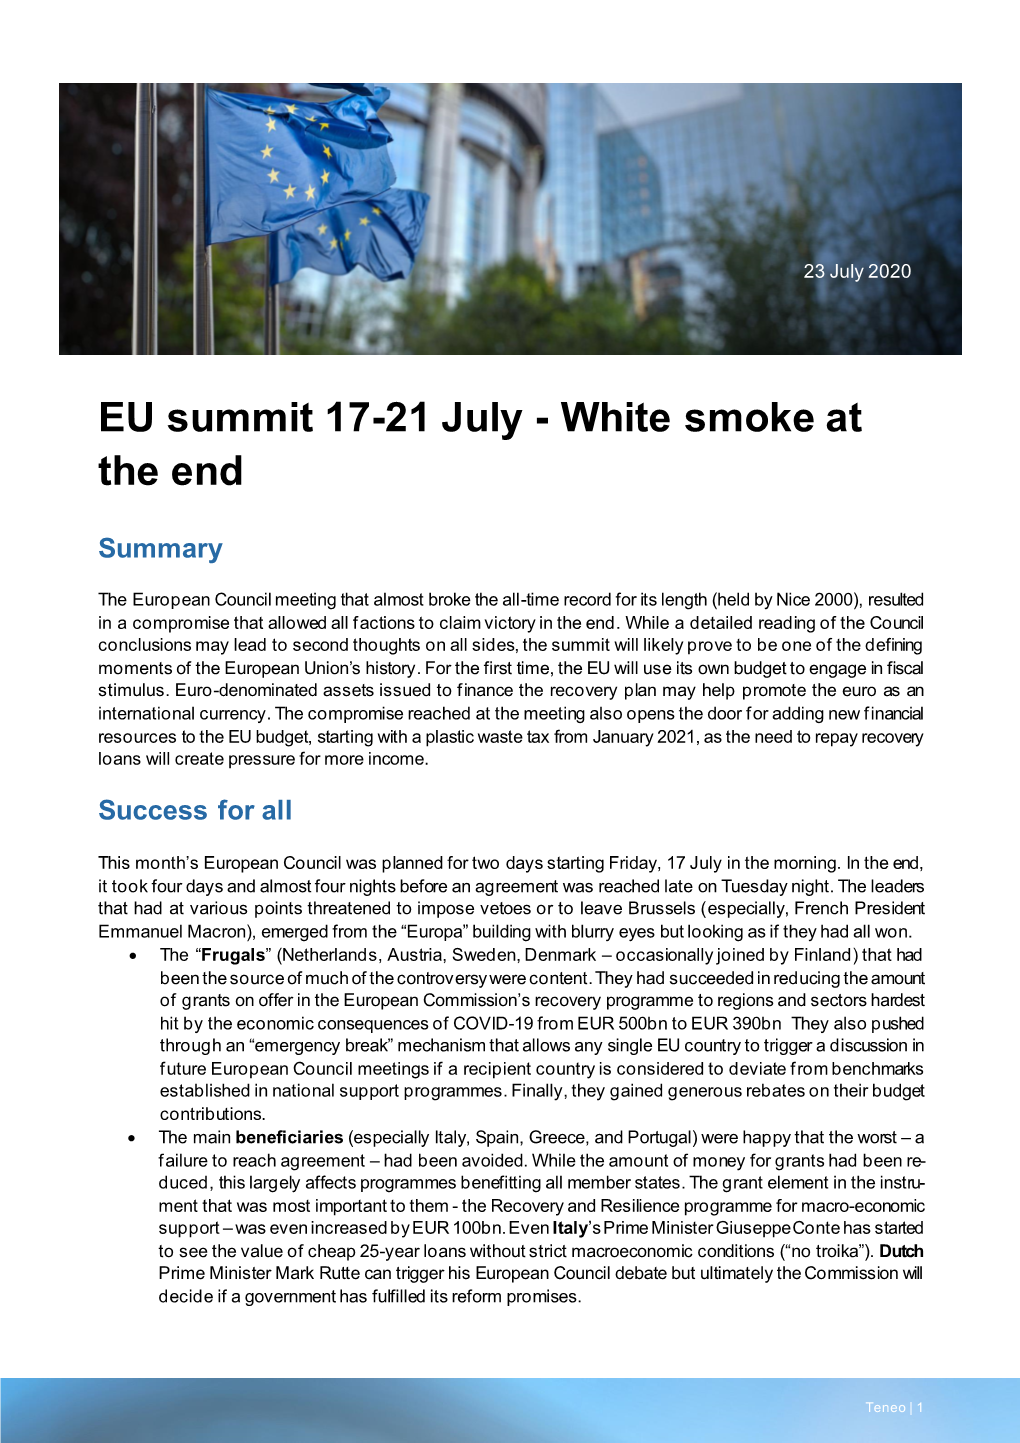 EU Summit 17-21 July - White Smoke at the End